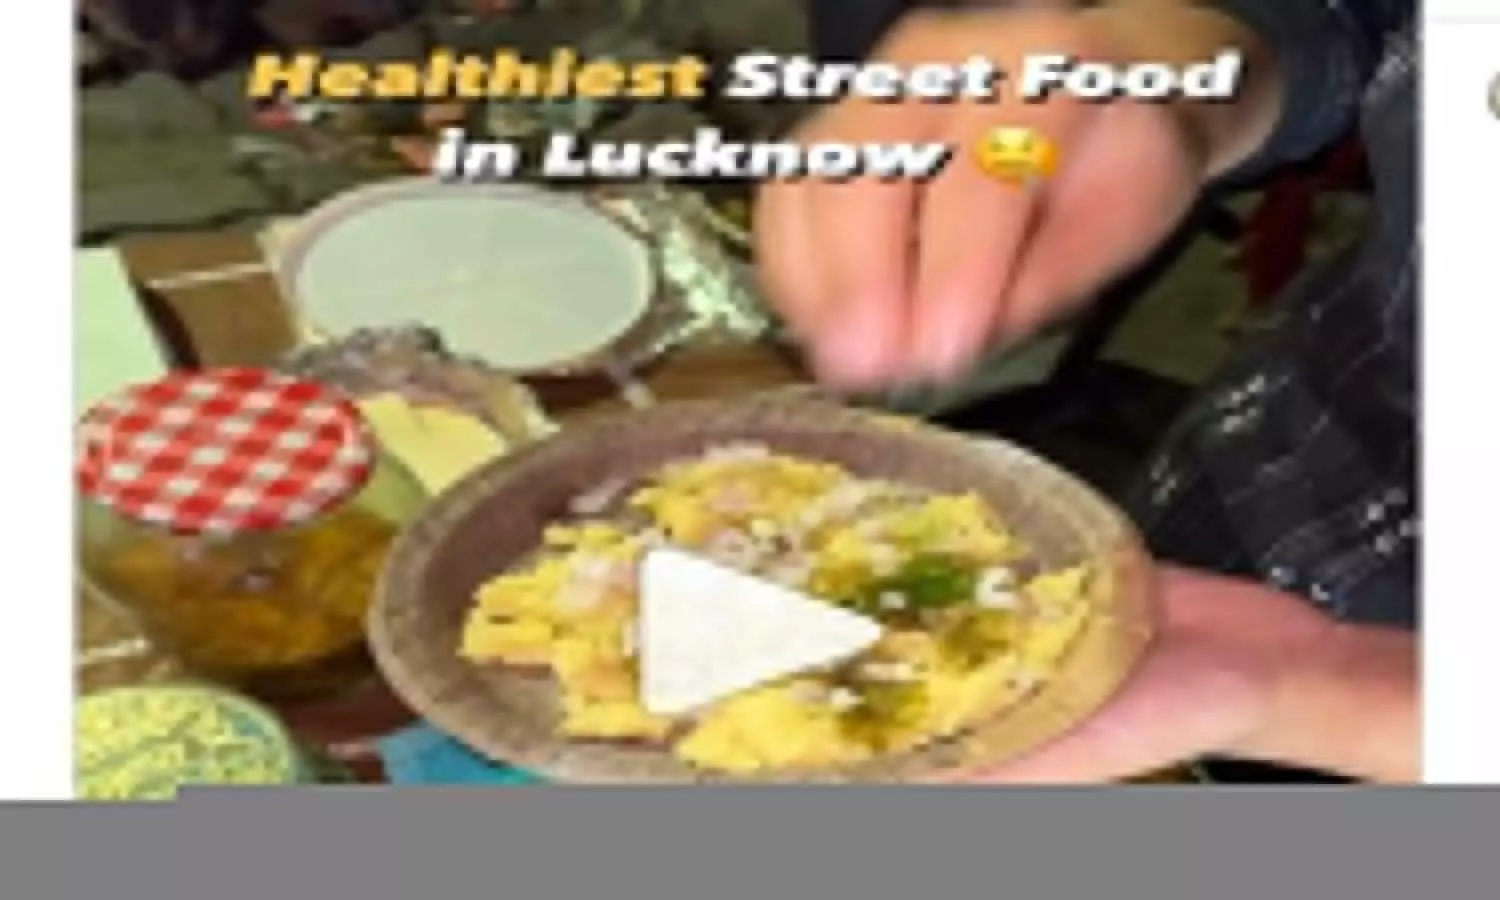 Lucknow Healthy Street Food